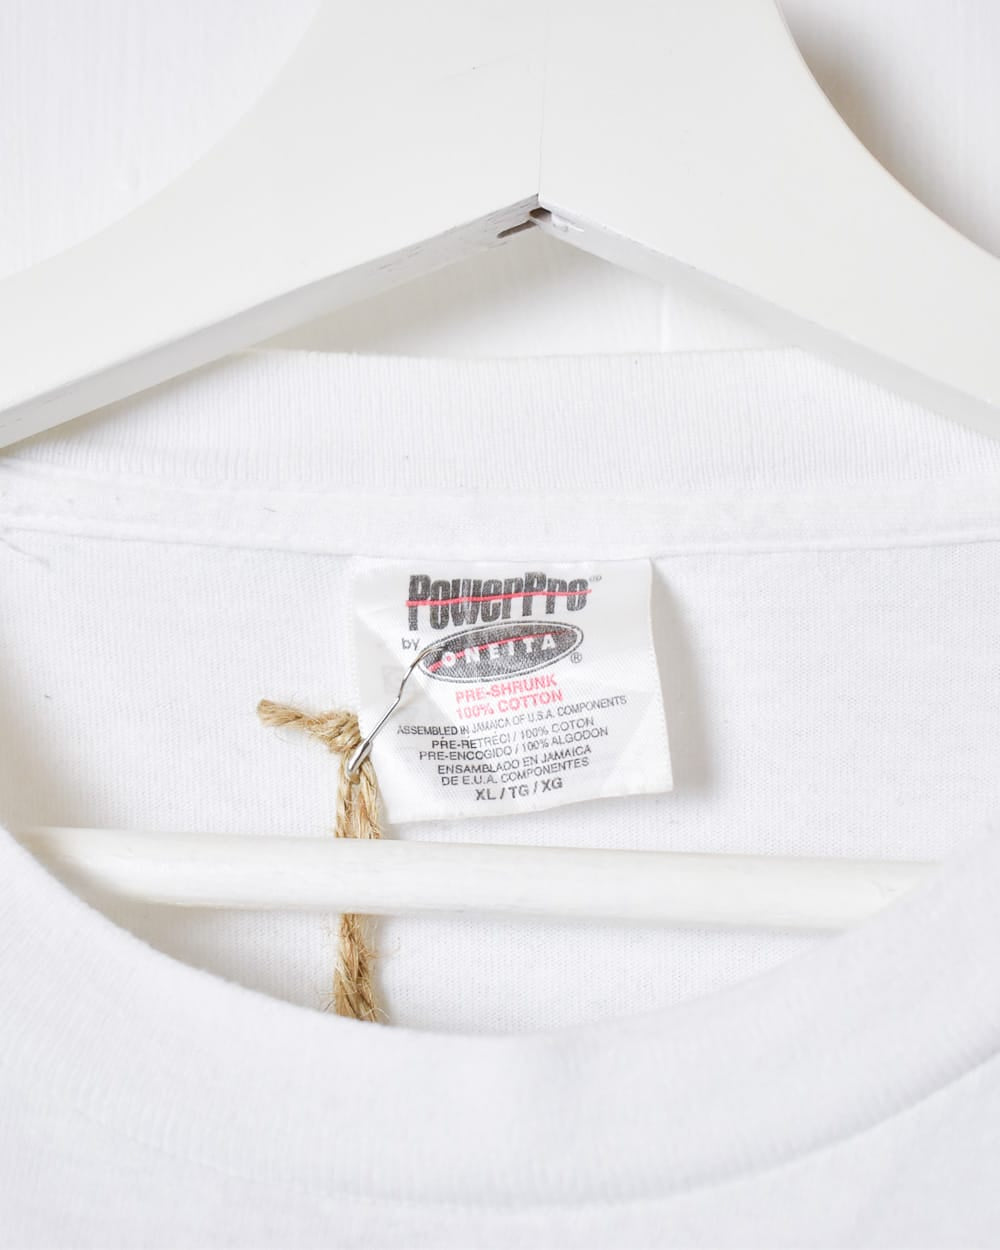 White Nascar 50th Anniversary Single Stitch T-Shirt - X-Large